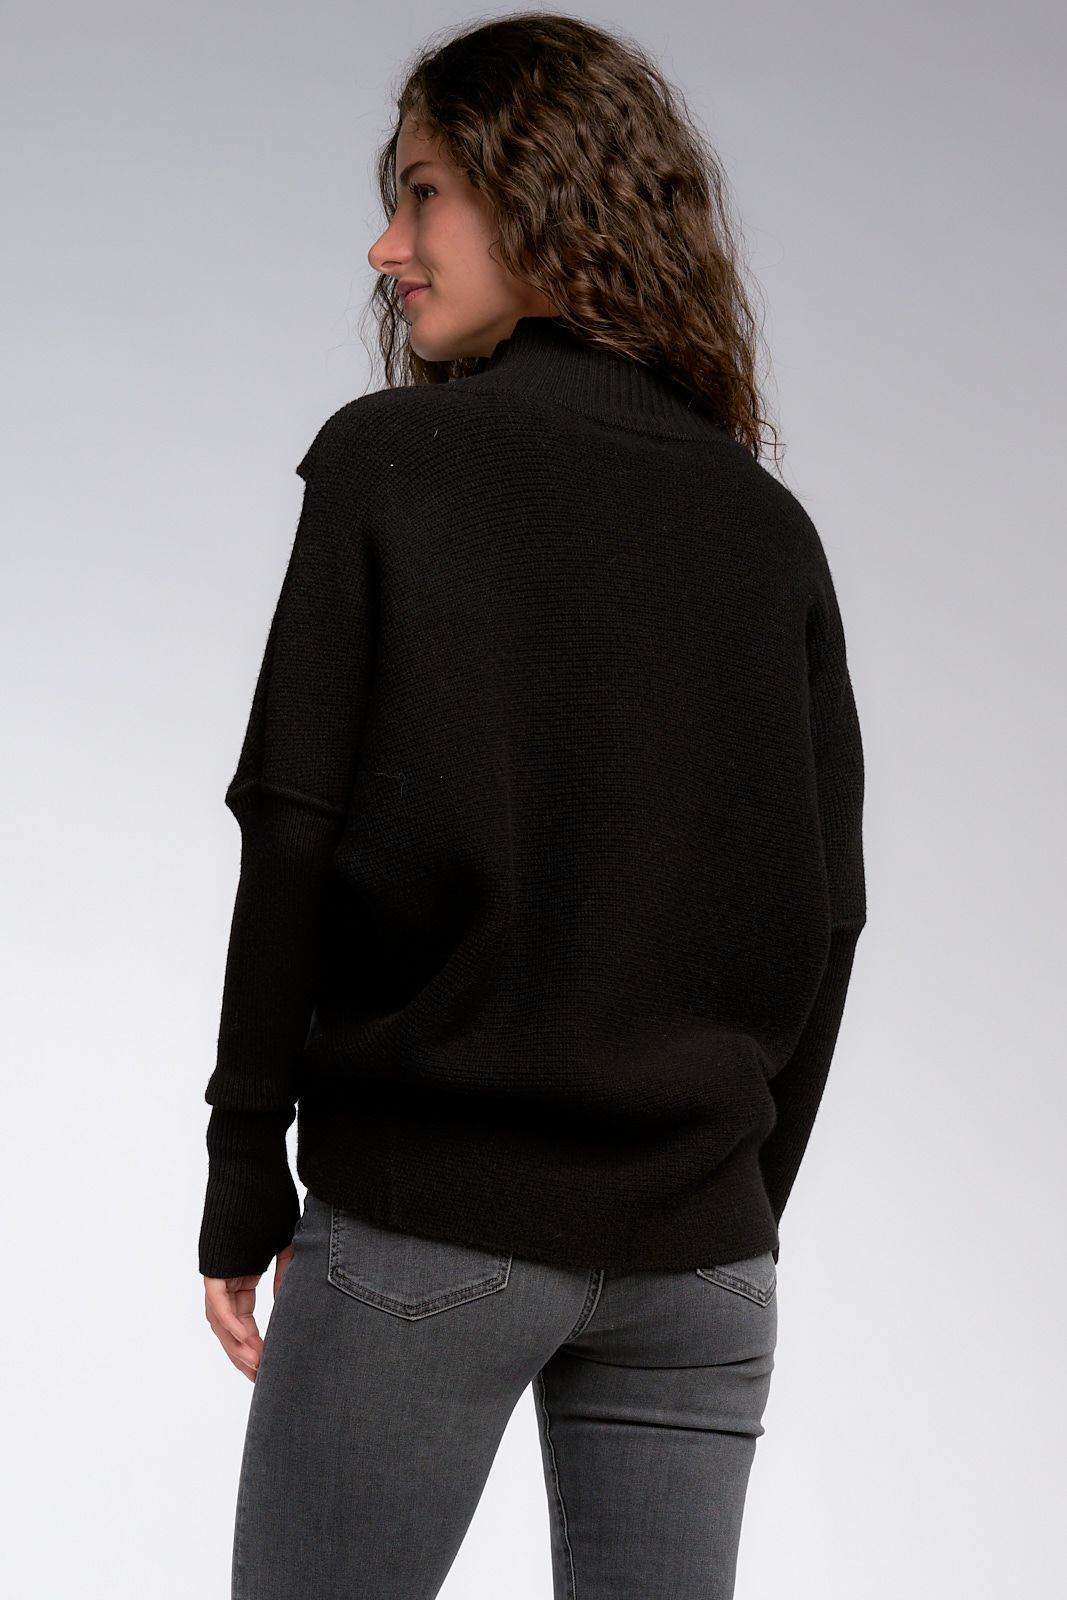 Turtleneck Cross Front Sweater